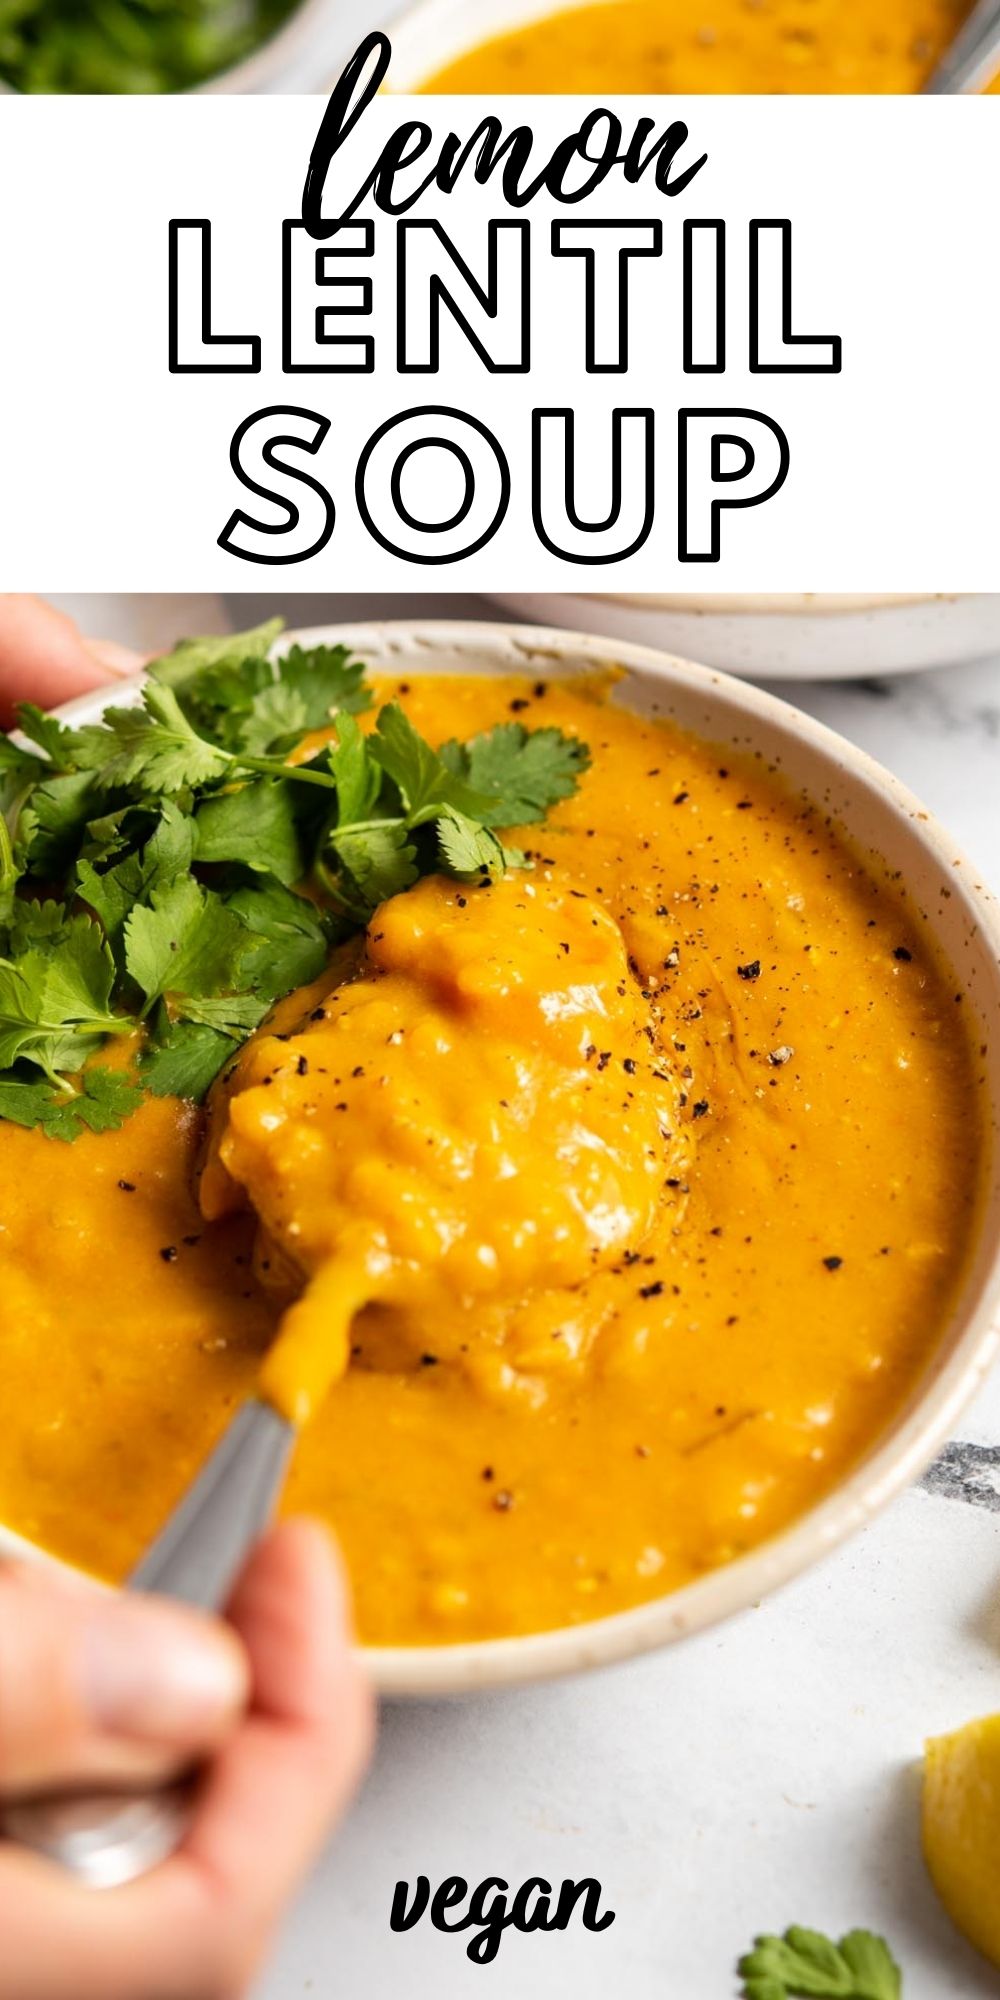 Pinterest graphic with an image and text for vegan lemon lentil soup.